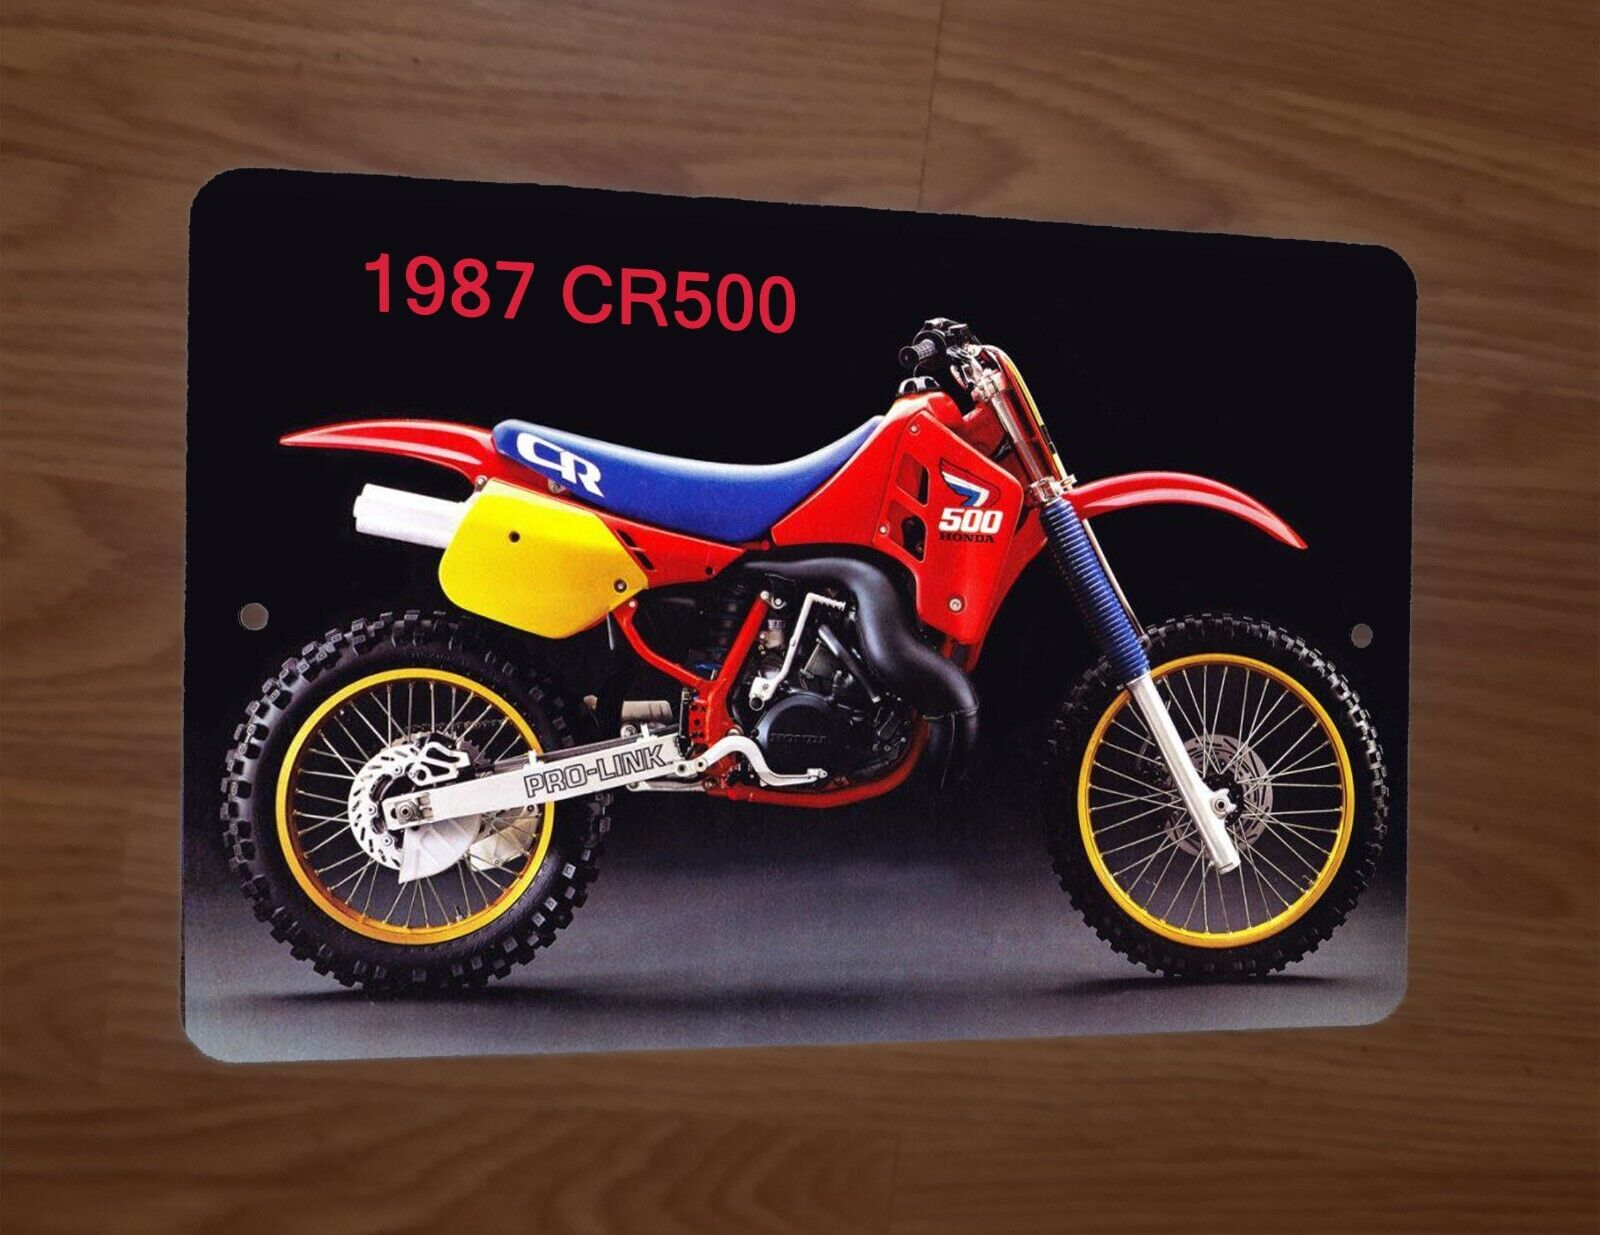 1987 Honda CR500 Motocross Motorcycle Dirt Bike Photo 8x12 Metal Wall Sign